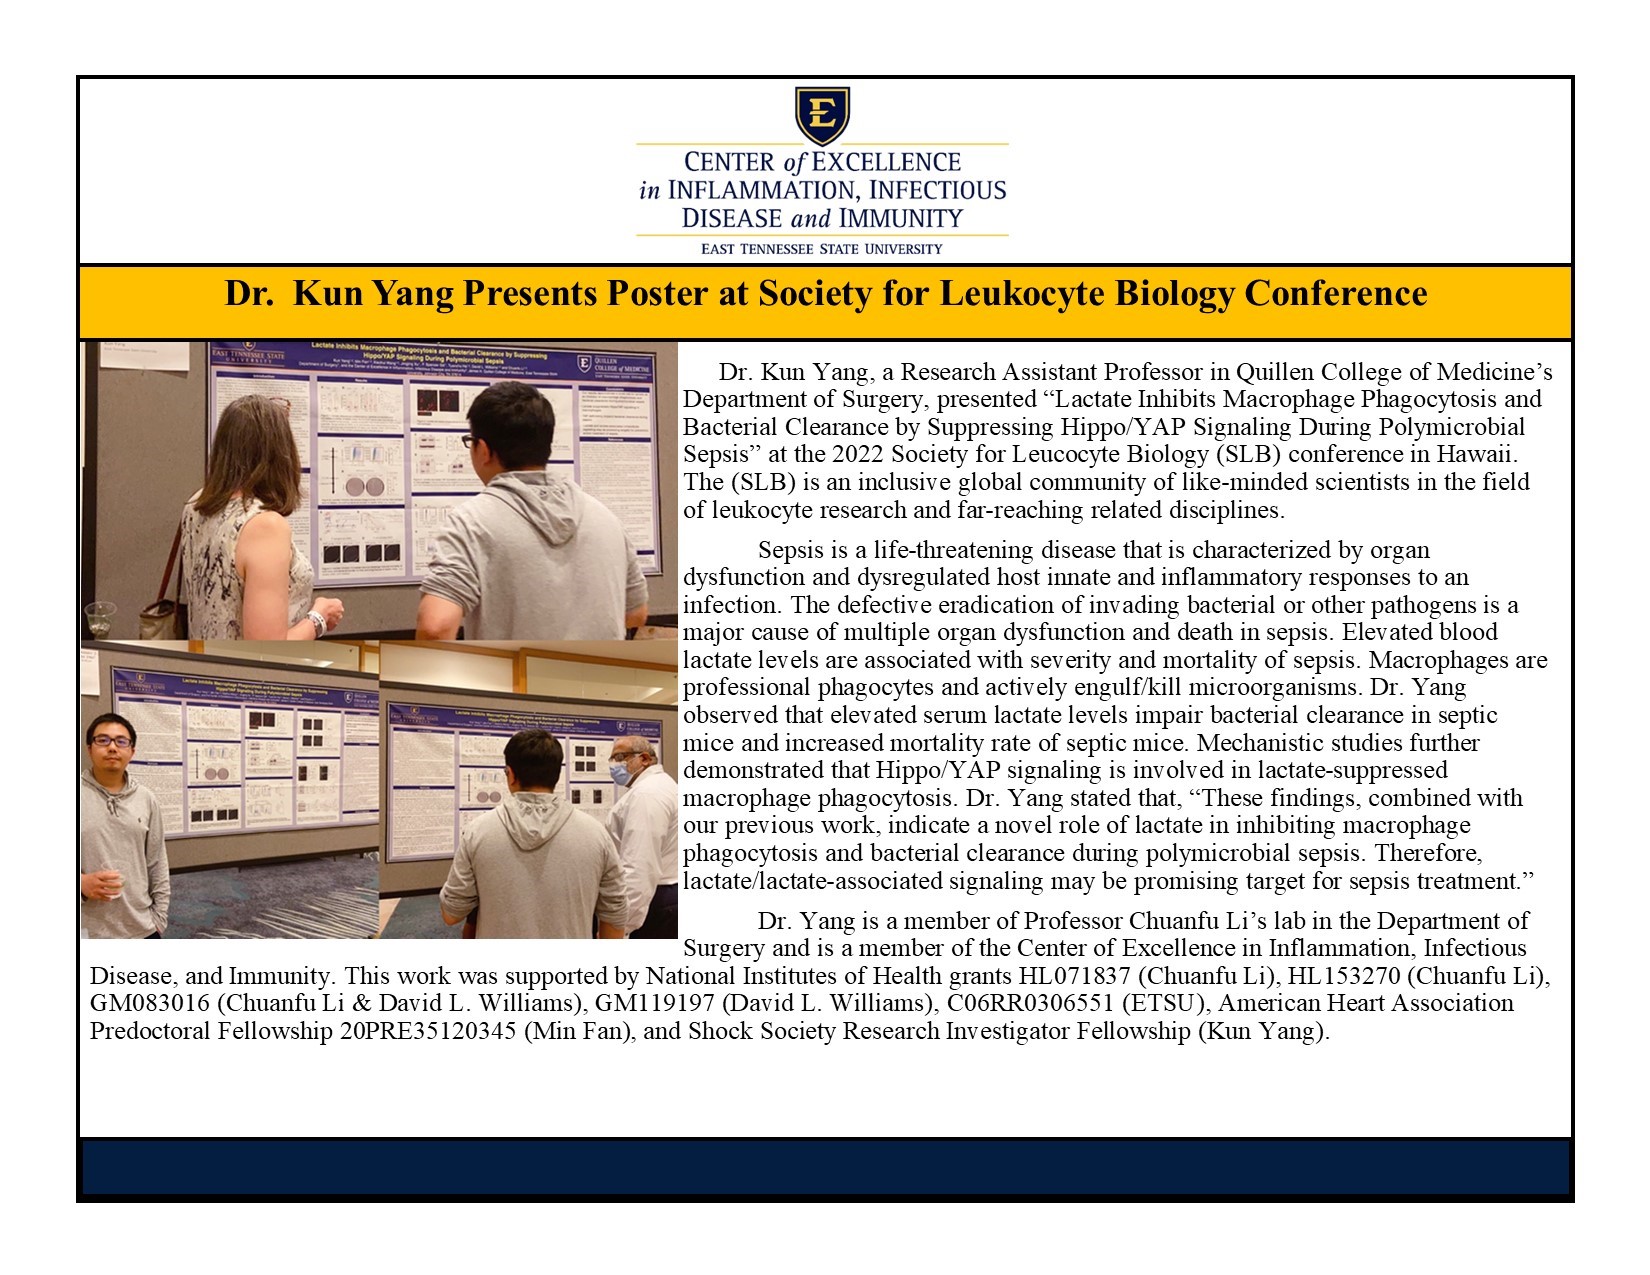 image for Dr. Kun Yang Presents Poster at SLB Conference